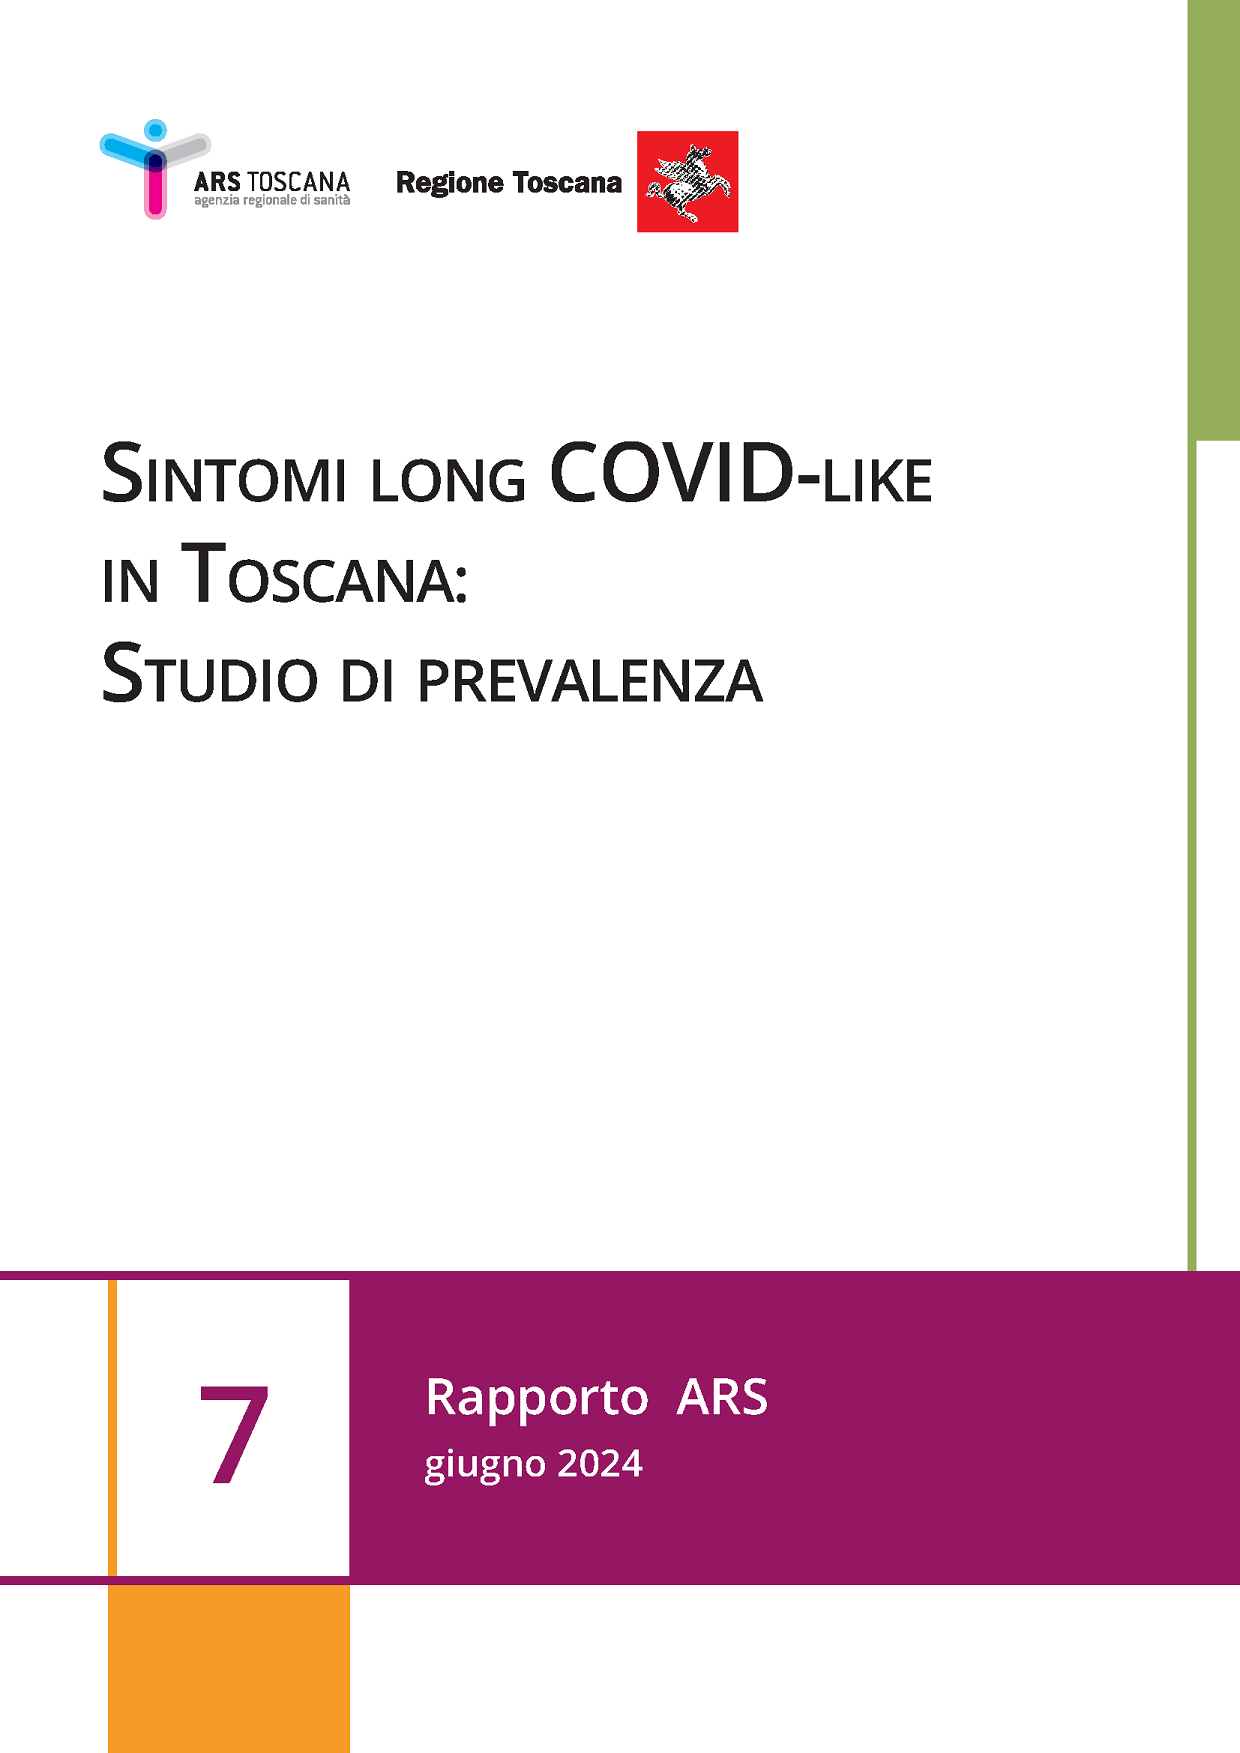 Sintomi long COVID-like in Toscana: studio di prevalenza